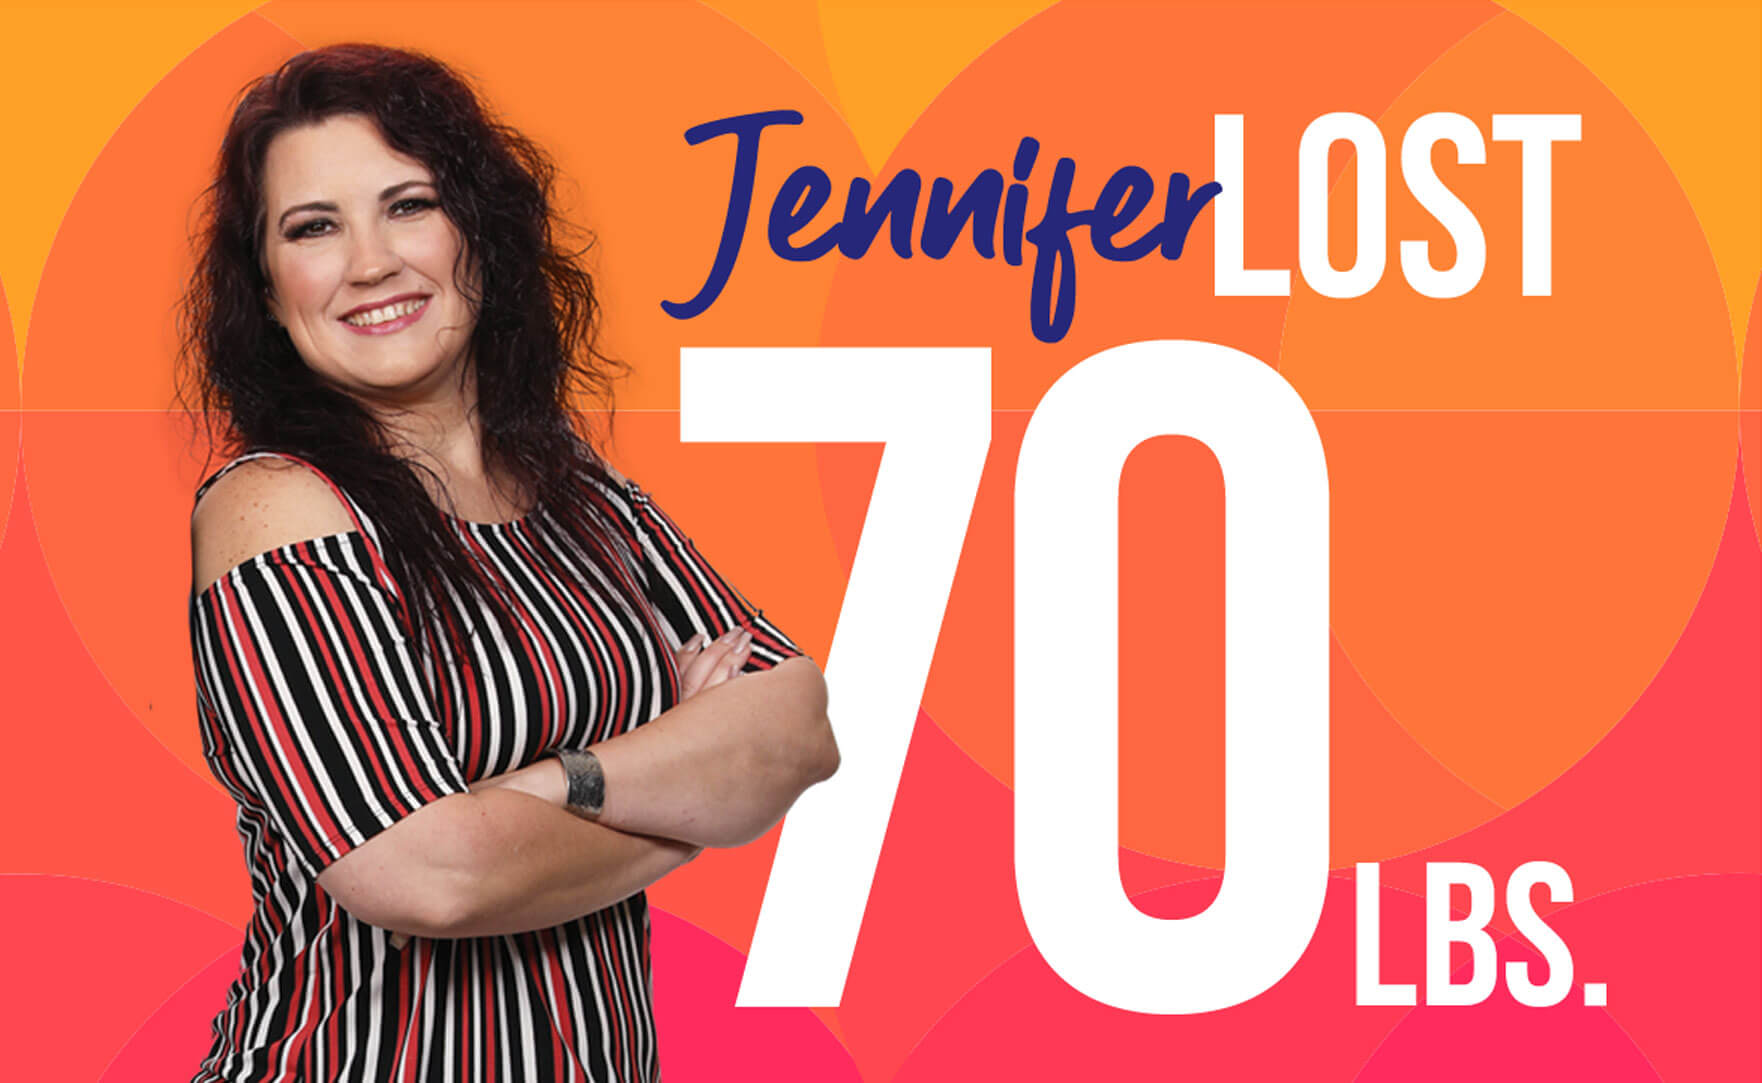 Jennifer lost 70 lbs with the Keto-90 program.